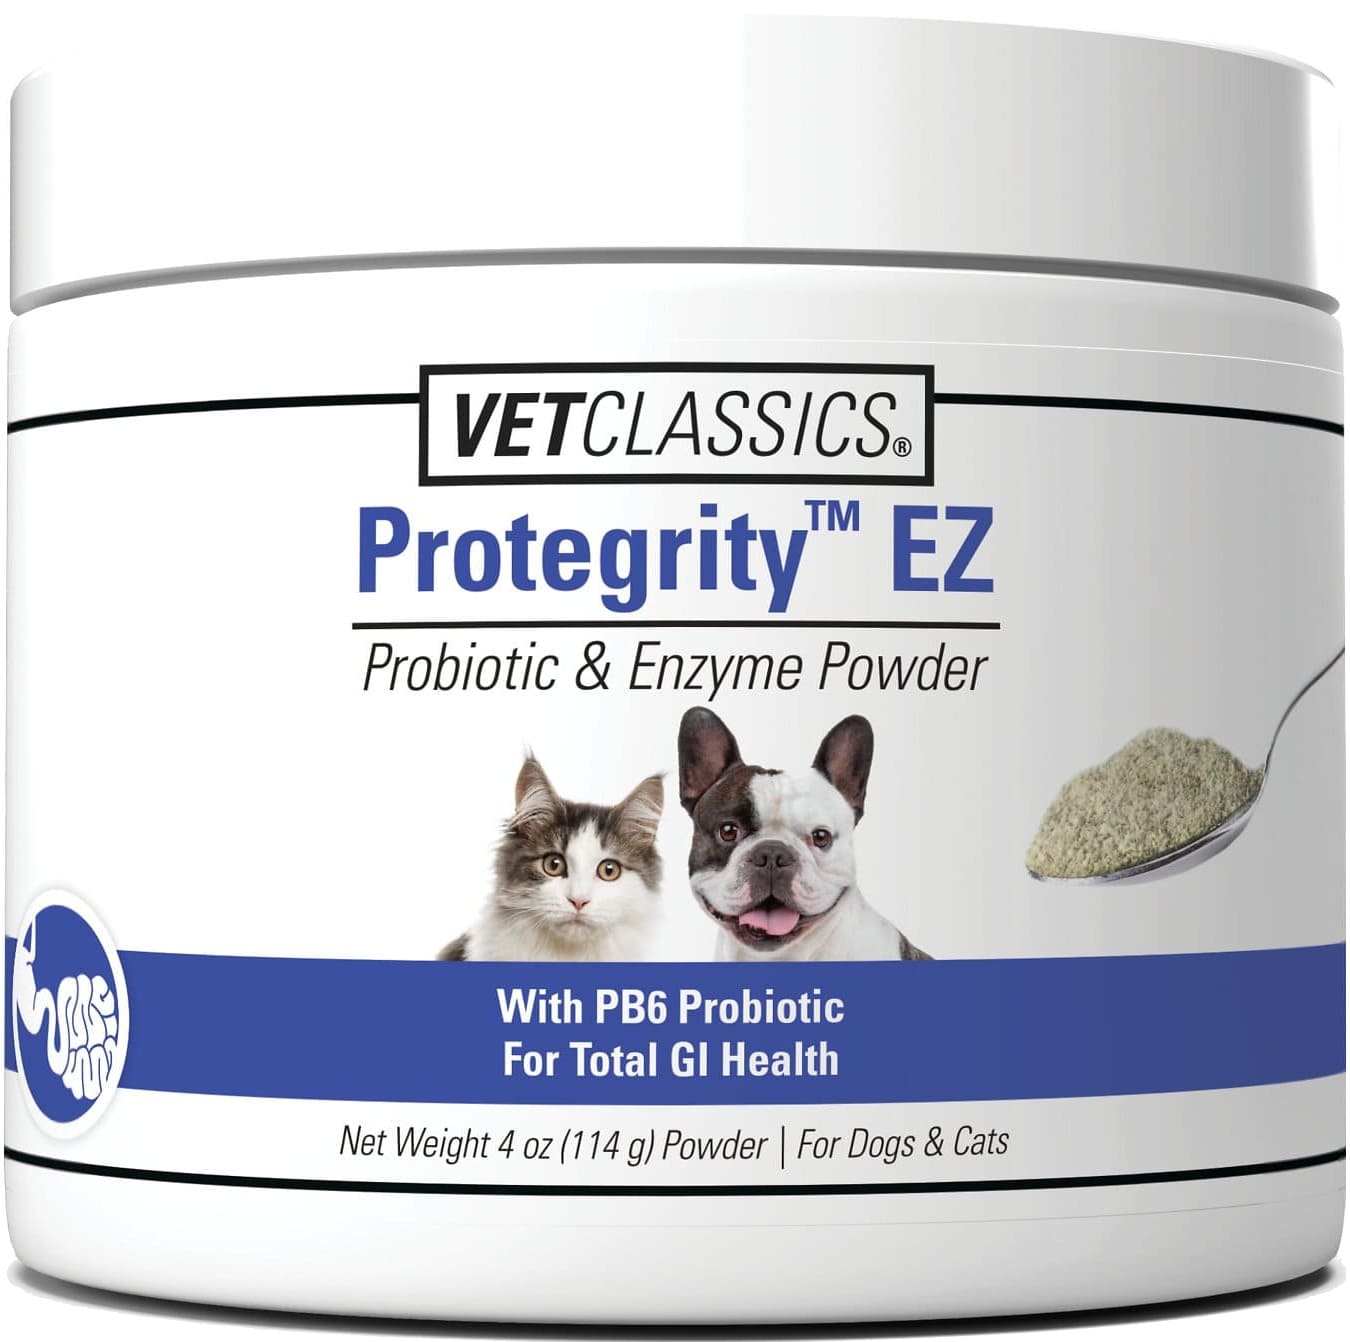 VetClassics Protegrity EZ Powder